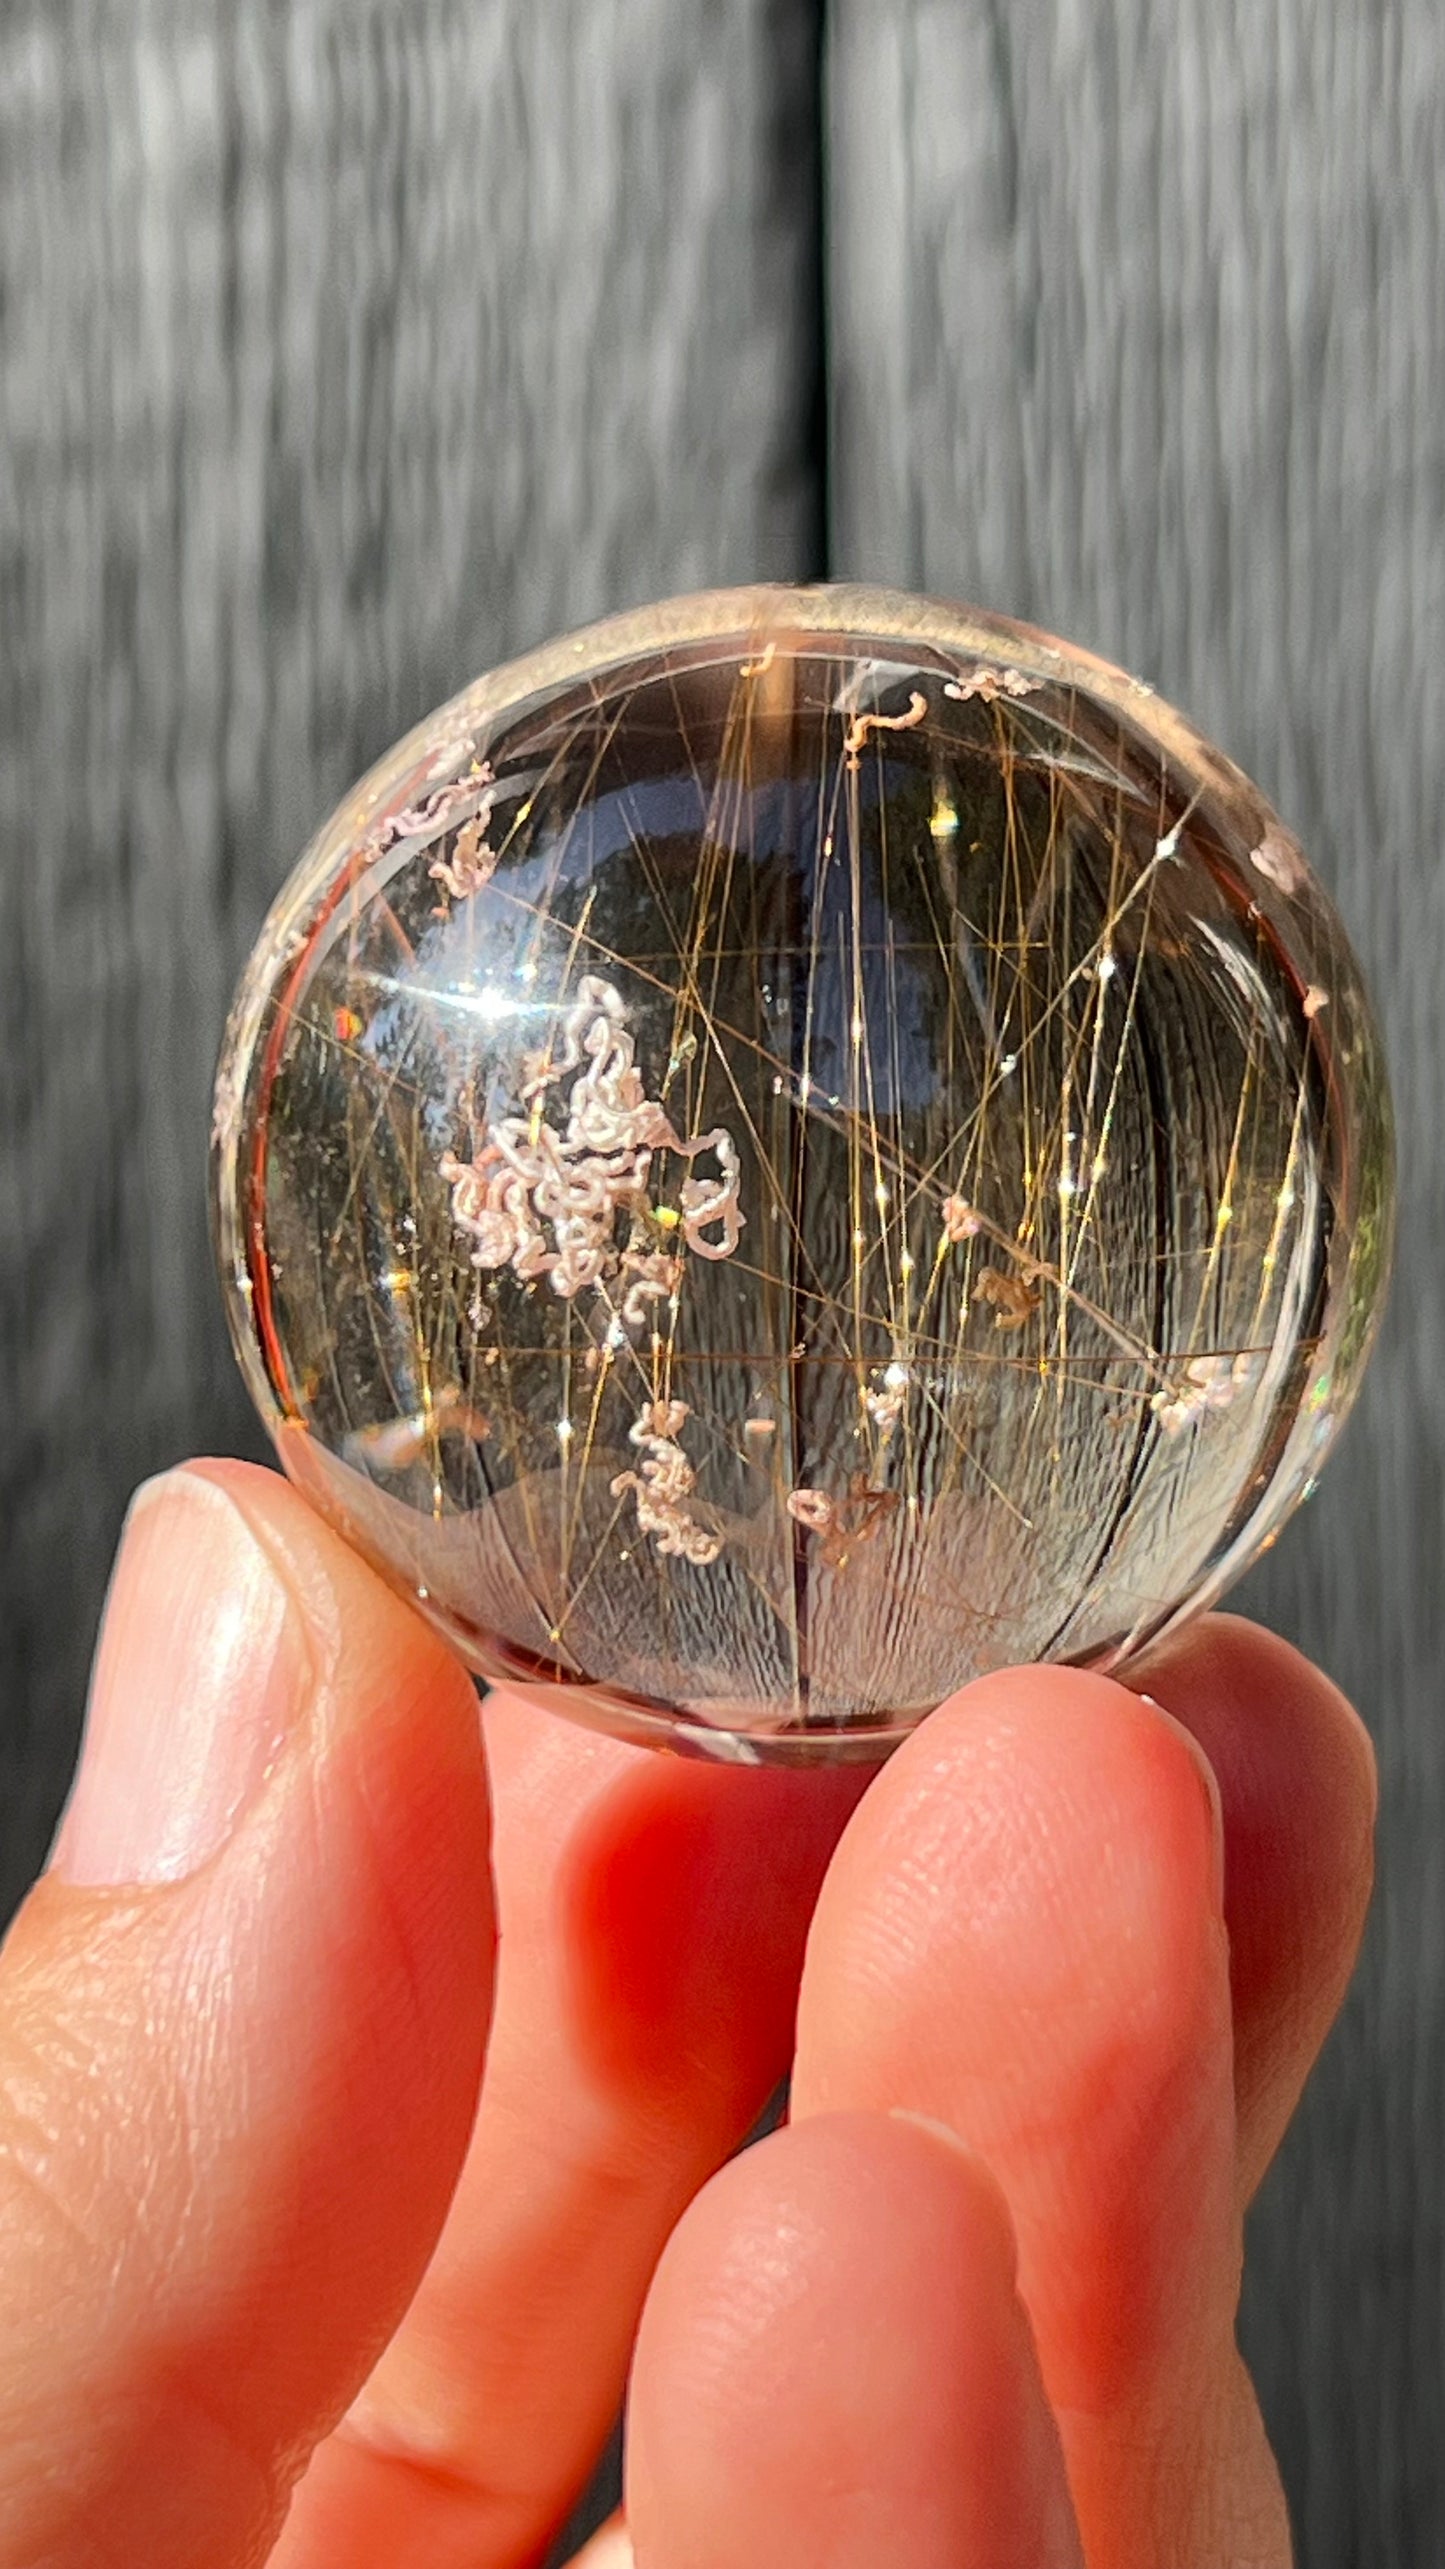 Gold Rutile Quartz Sphere with Unique Inclusions